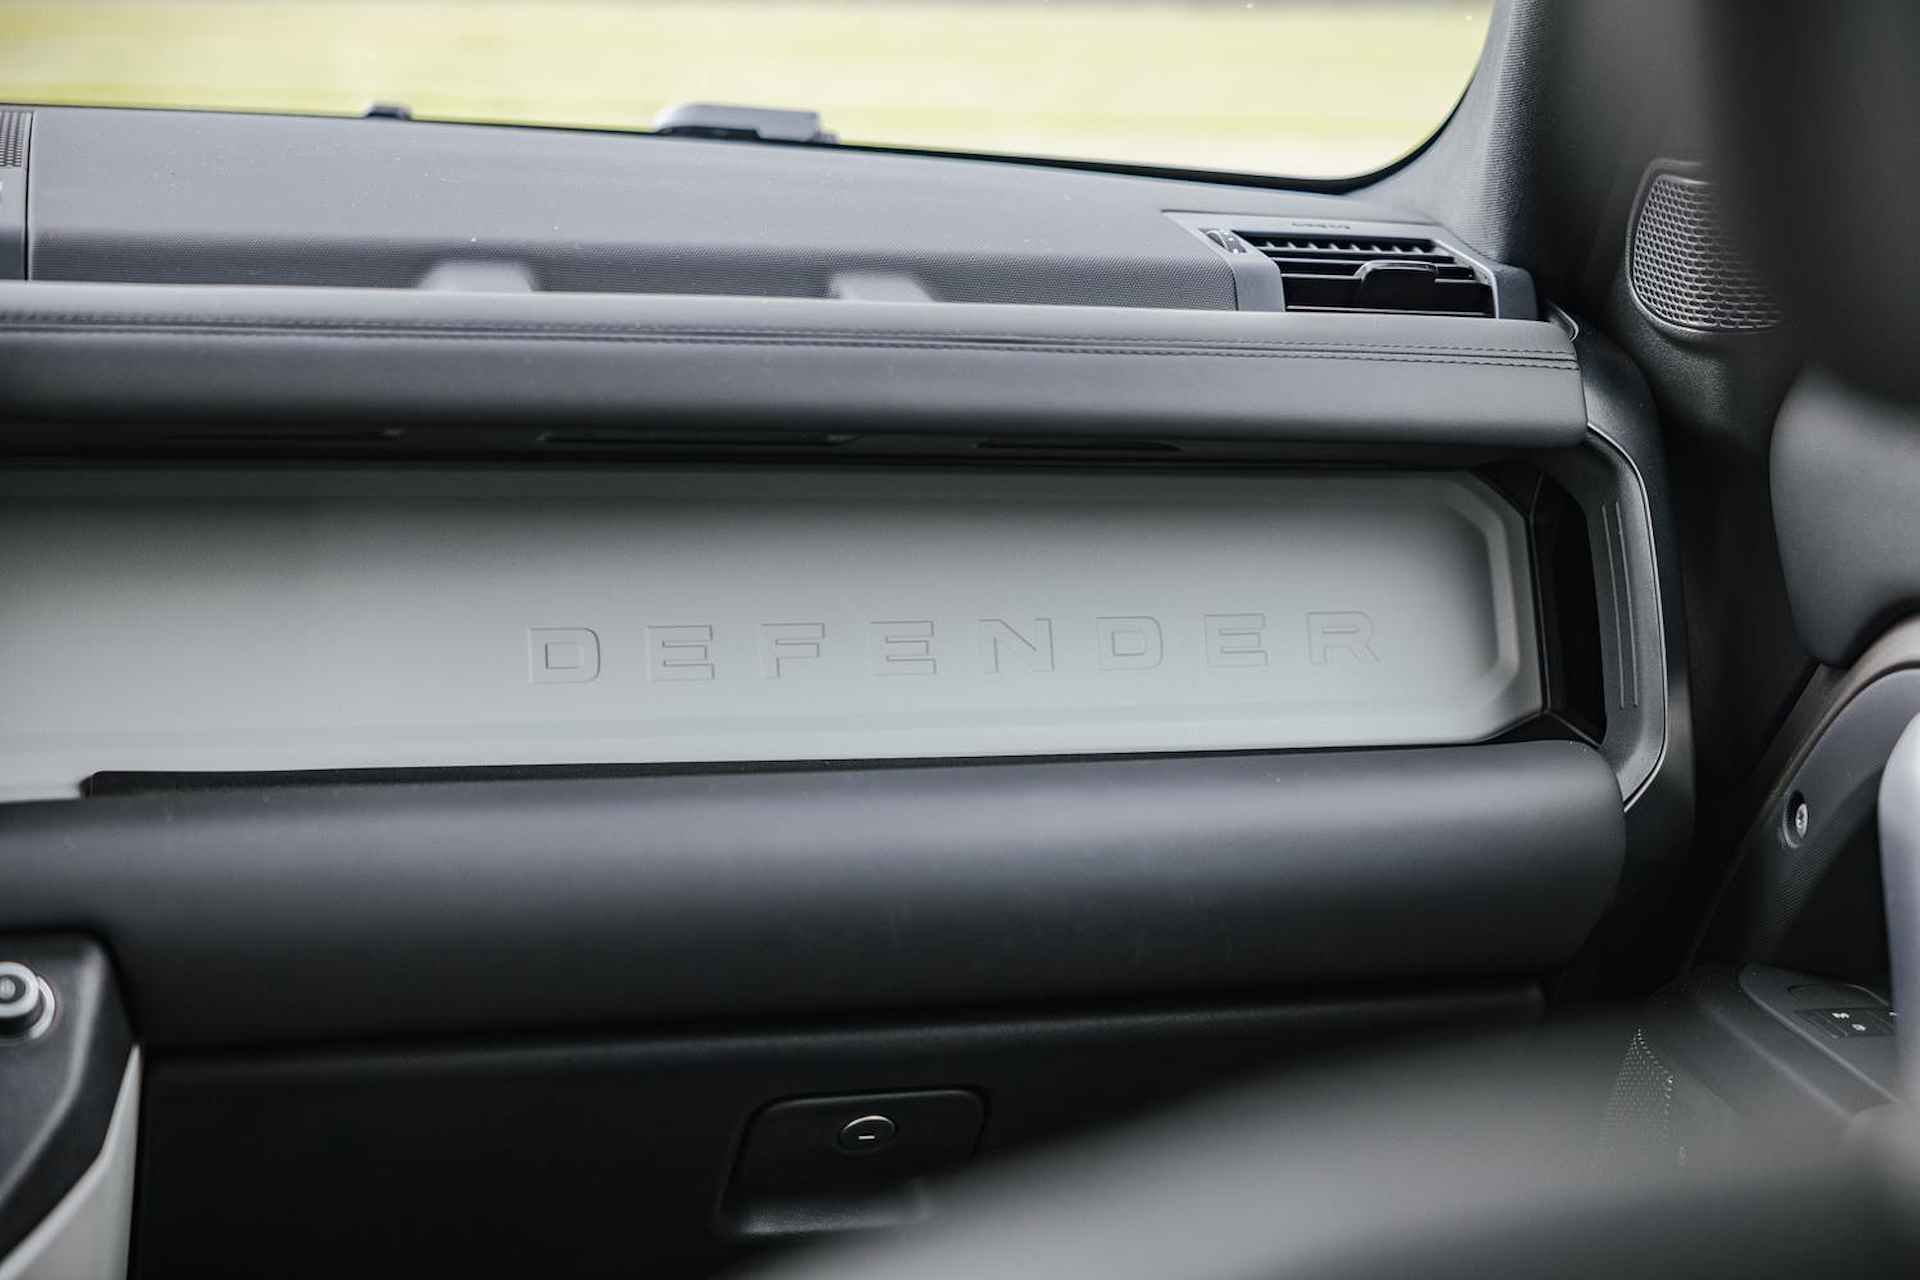 Land Rover Defender 2.0 P400e 110 X-Dynamic HSE | Panoramadak | 22" Velgen in Gloss Black | 11,4" Touch Screen | Cold Climate Pack | Elektrische Trekhaak | Expedition imperiaal | Uitklapbare Dakladder| All Season Banden - 30/43